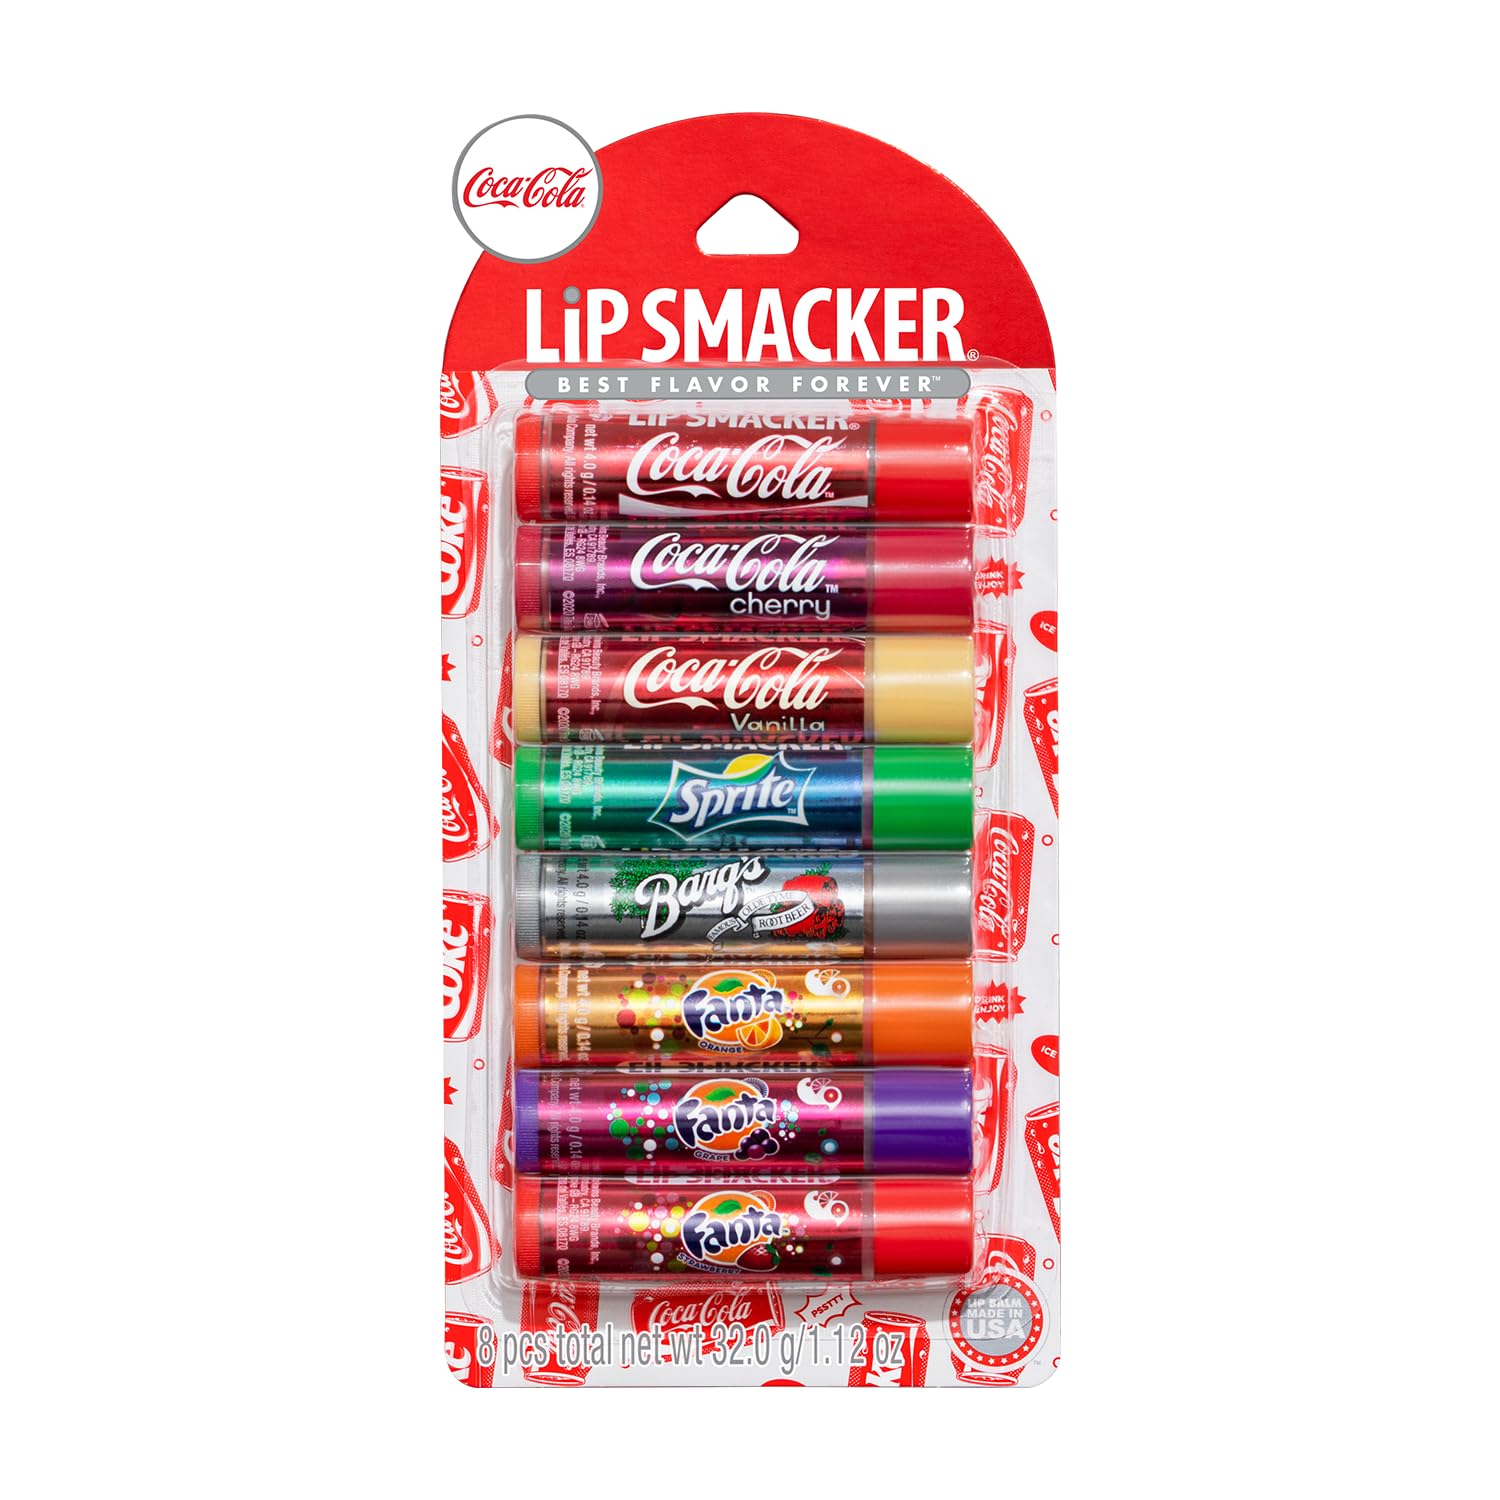 Lip Smacker Coca-Cola Flavored Balm - 8 Moisturizing Lip Balms, Hydrating & Protecting, Fun Assortment - Vegan - Coca Cola Collection